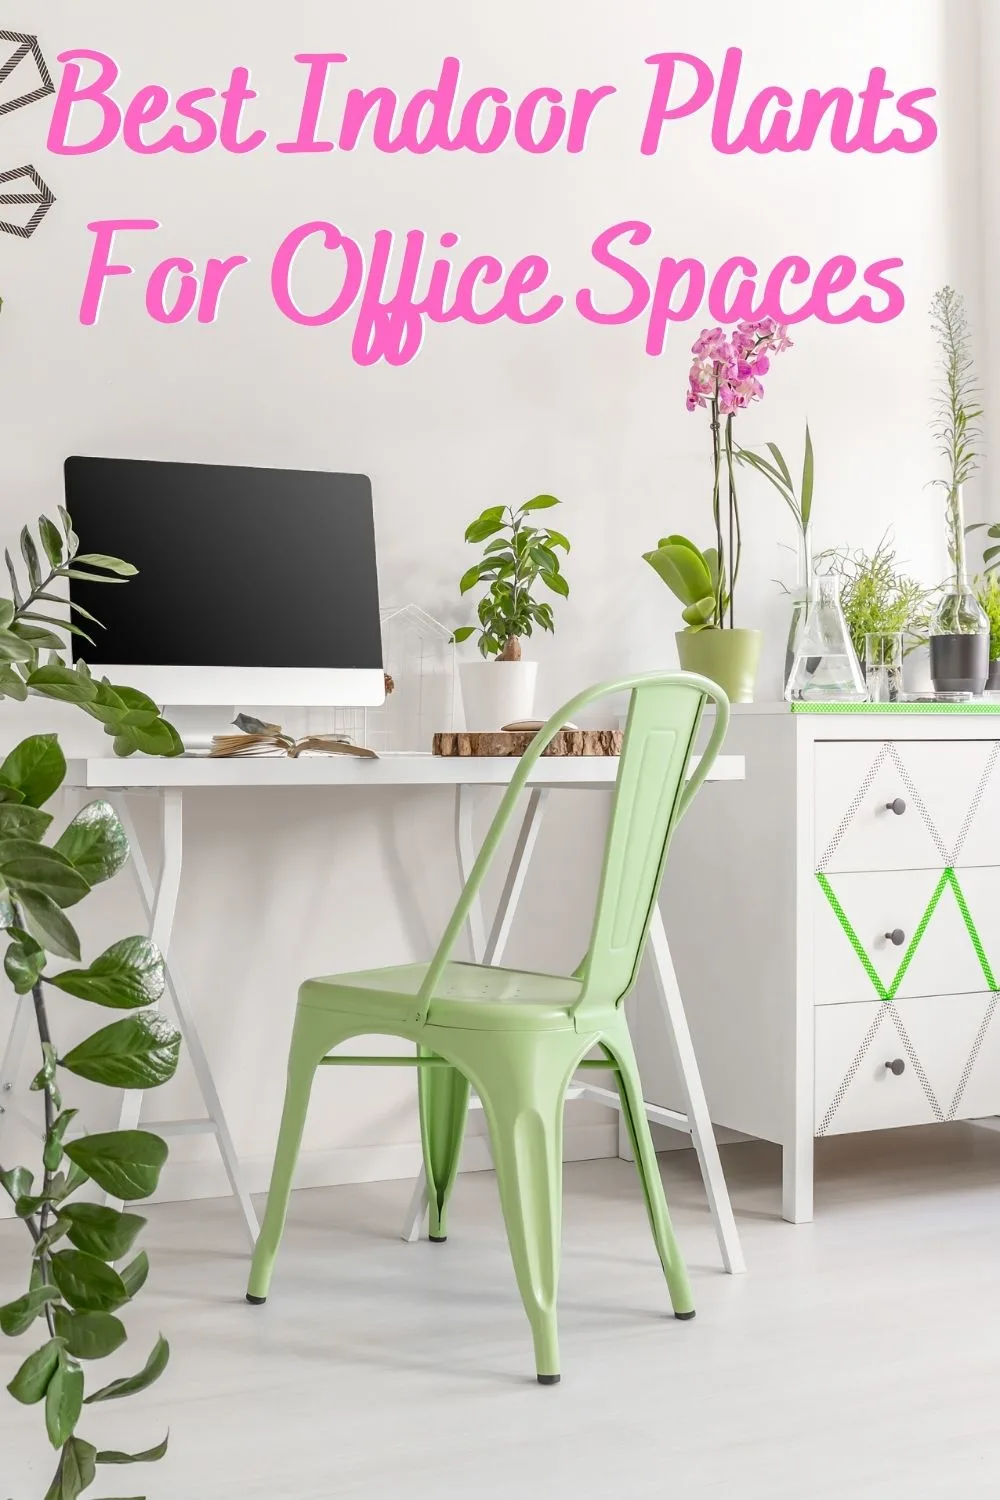 Best indoor plants for office spaces